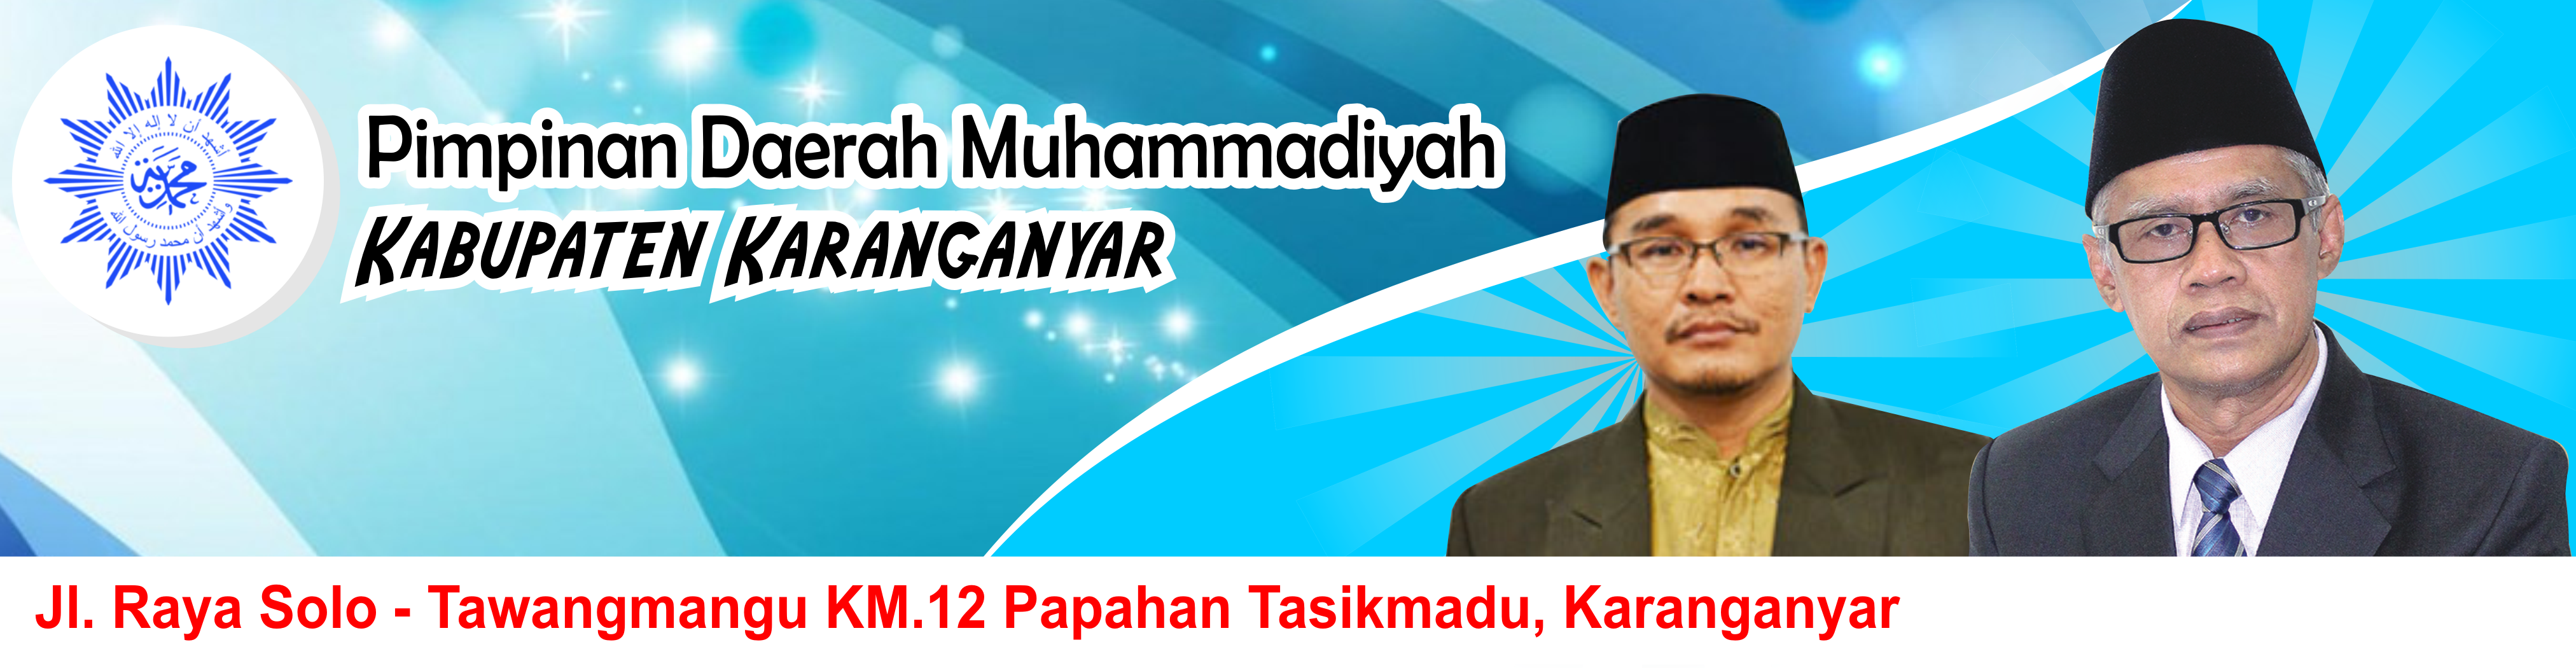 Lembaga Amal Zakat Infaq dan Shodaqqoh Pimpinan Daerah Muhammadiyah Kabupaten Karanganyar